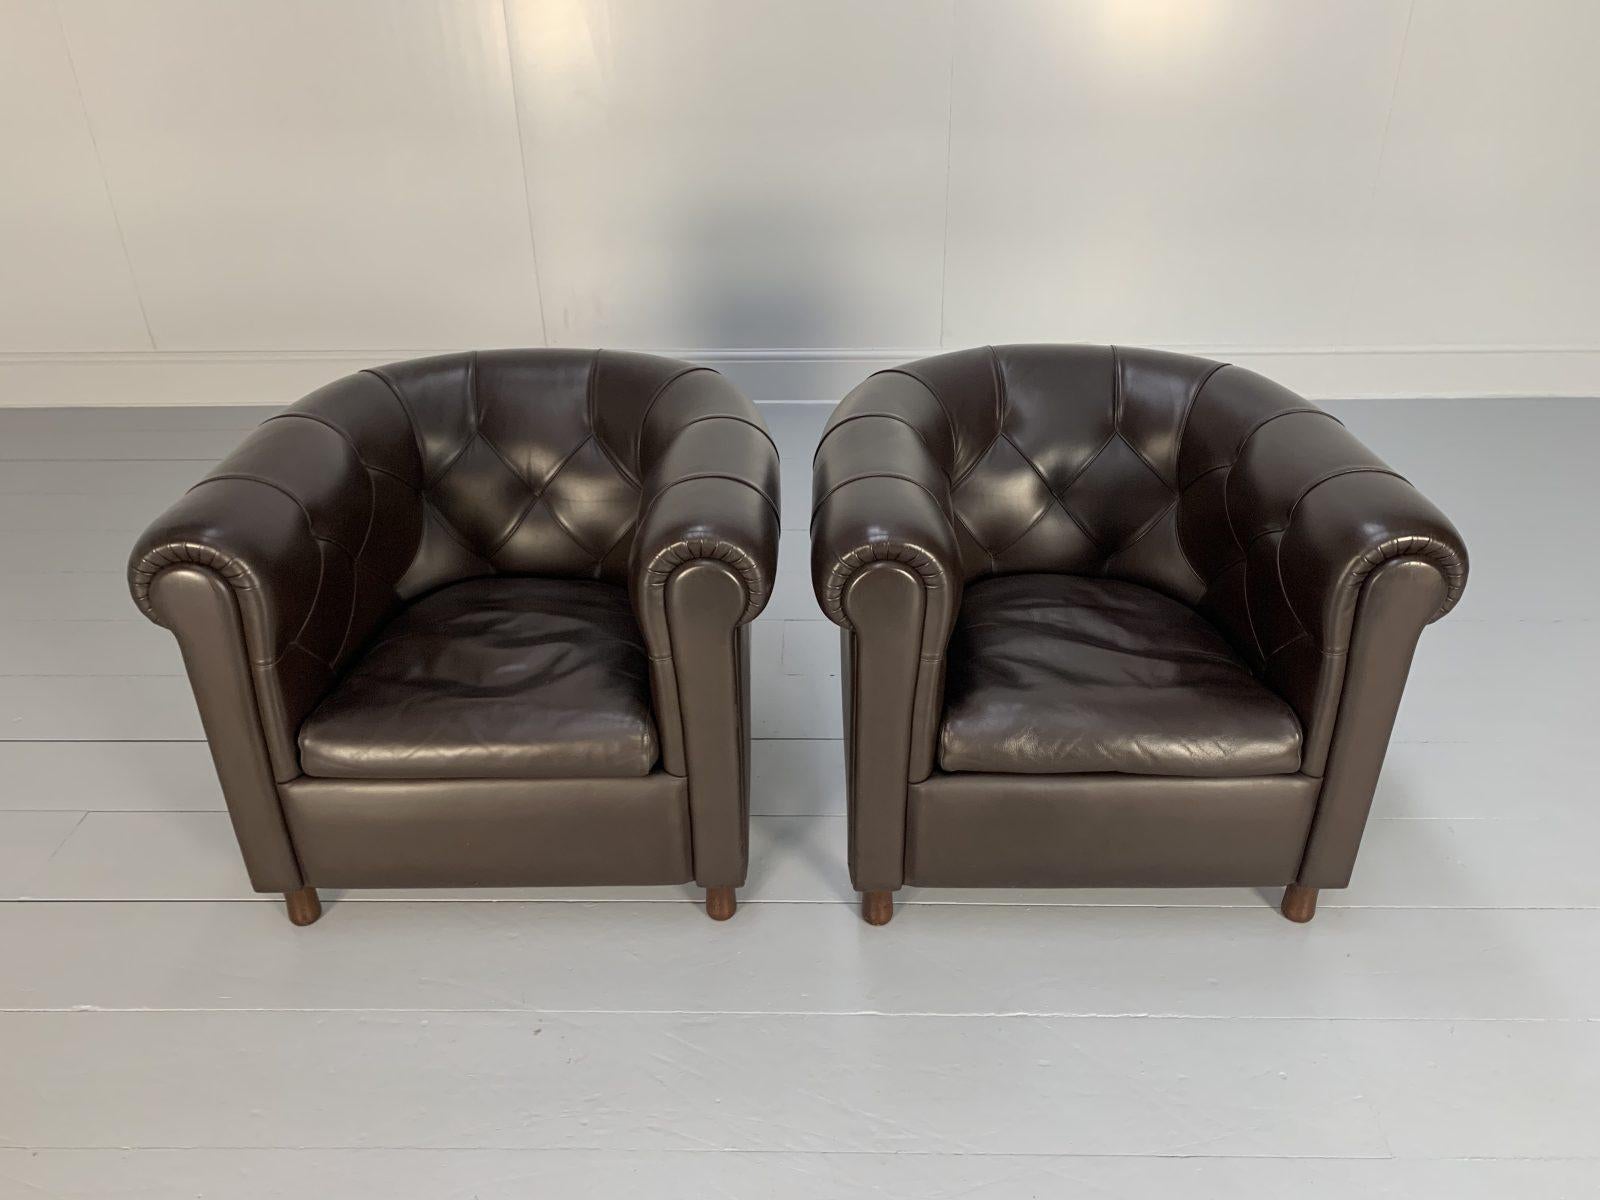 2 Poltrona Frau “Arcadia” Armchairs, in “Pelle Frau” Dark Brown Leather In Good Condition For Sale In Barrowford, GB